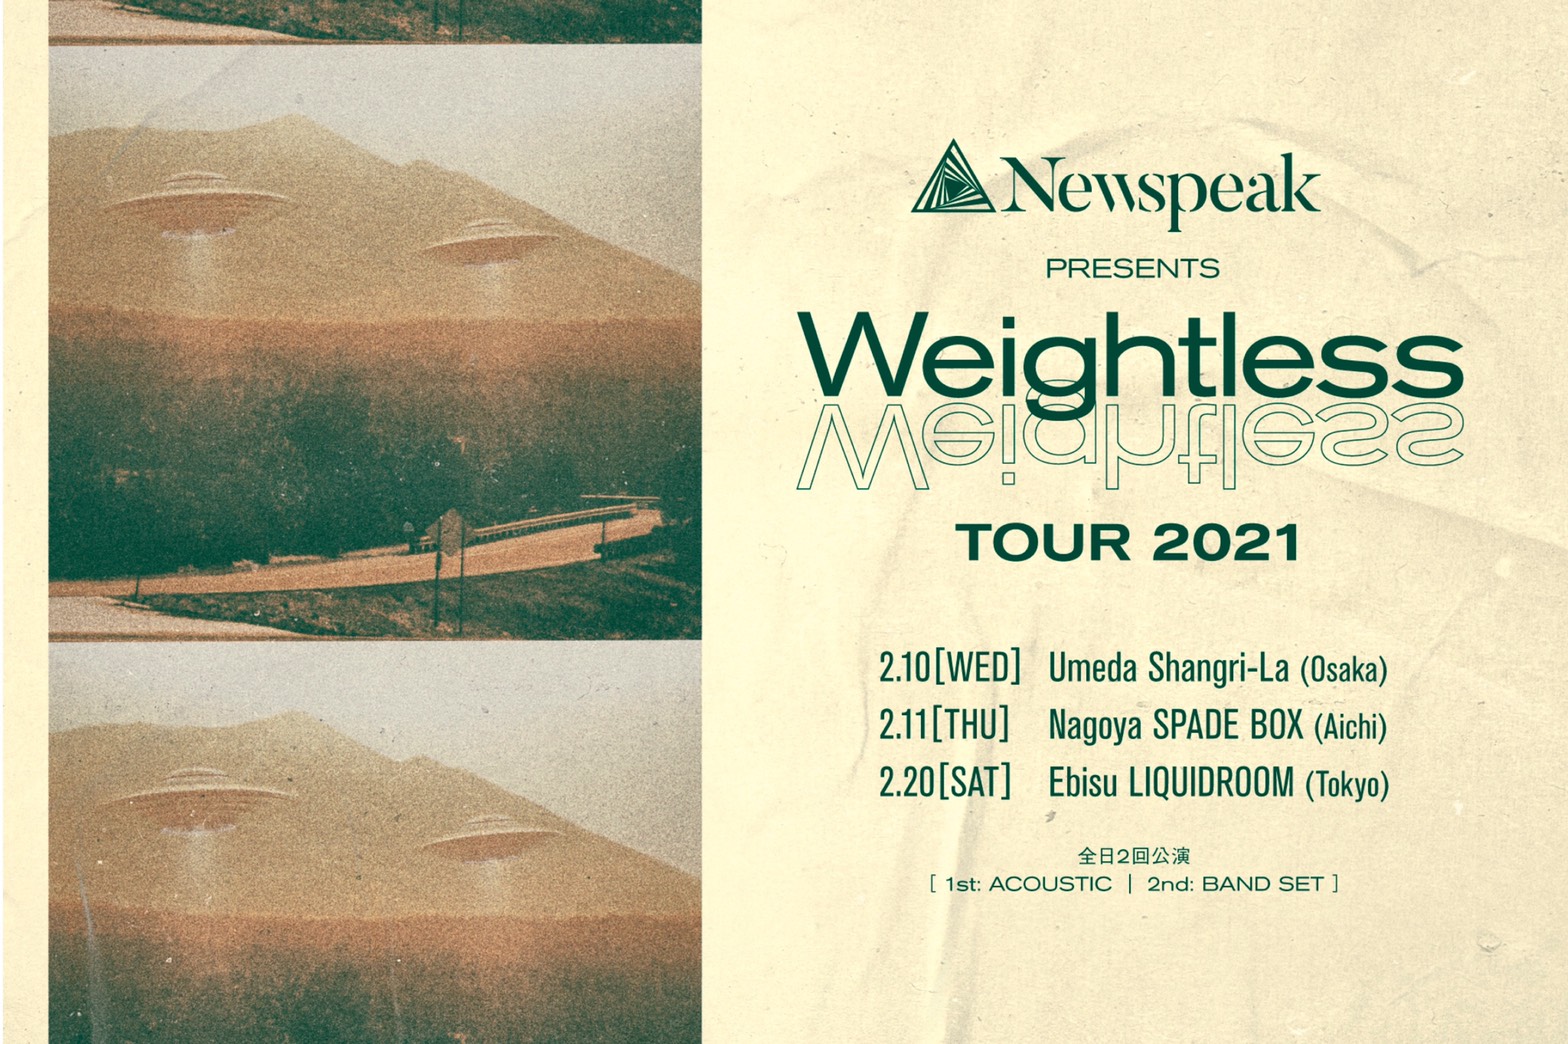 「Weightless Tour 2021」開催延期のお知らせ